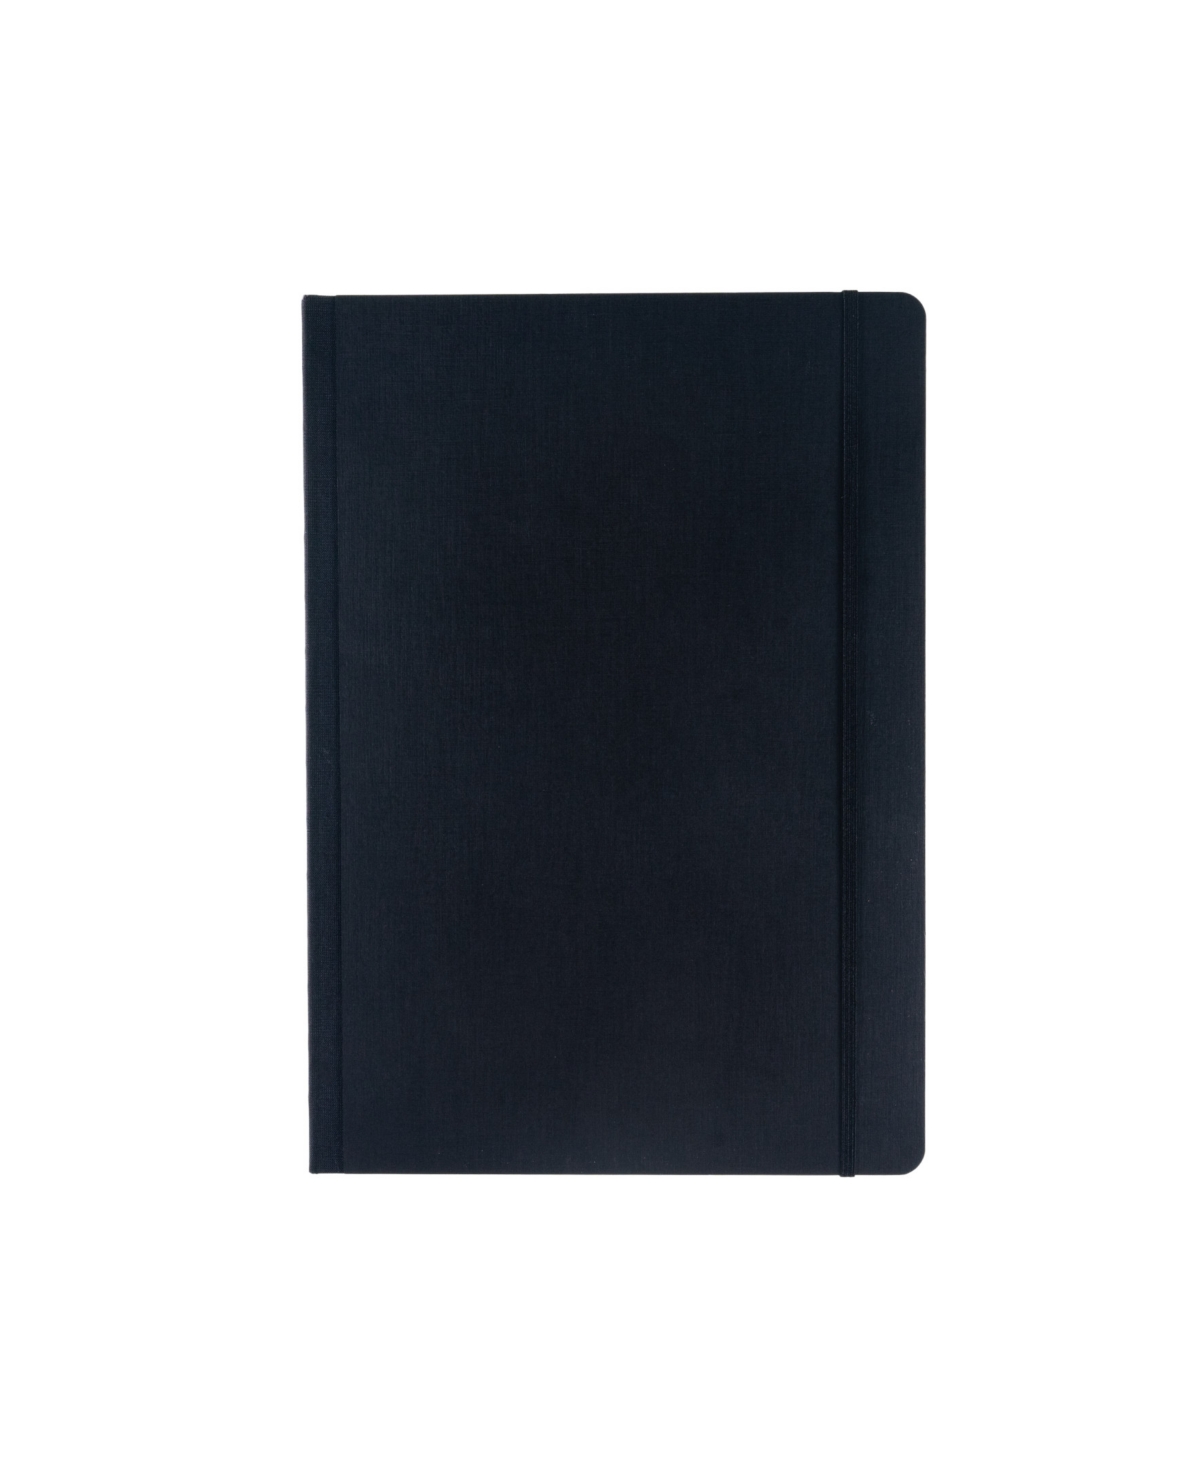 Ecoqua Plus Fabric Bound Lined A4 Notebook, 8.3" x 11.7" - Black